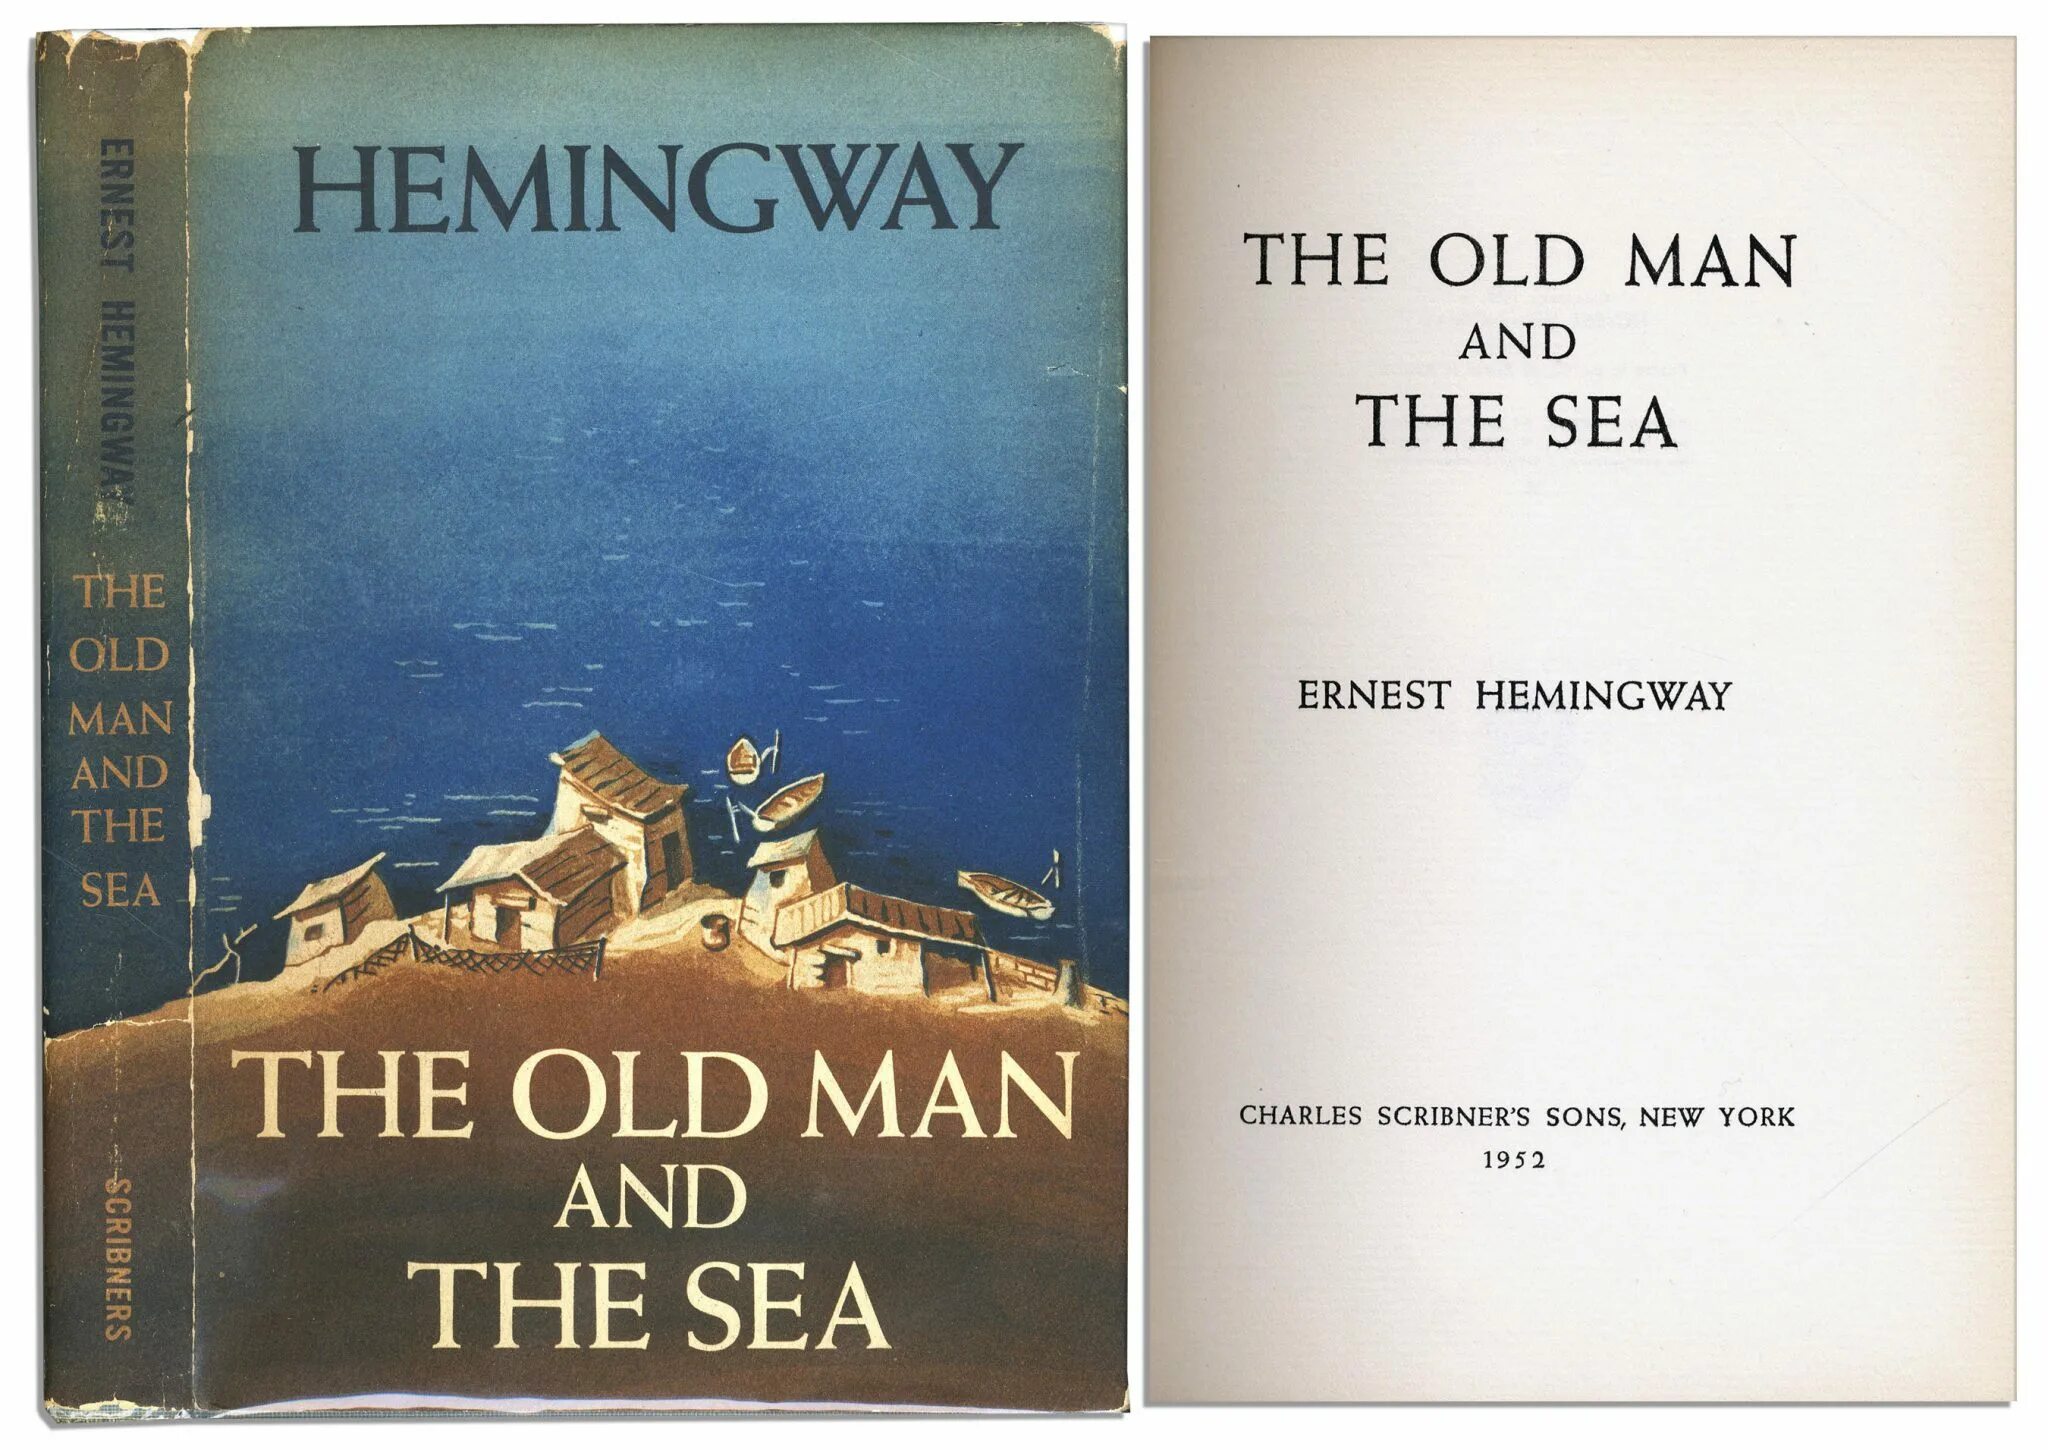 Хемингуэй на английском. Старик и море (the old man and the Sea) 1958. The old man and the Sea книга. Повести э. Хемингуэя «старик и море». The old man and the Sea Ernest Hemingway.